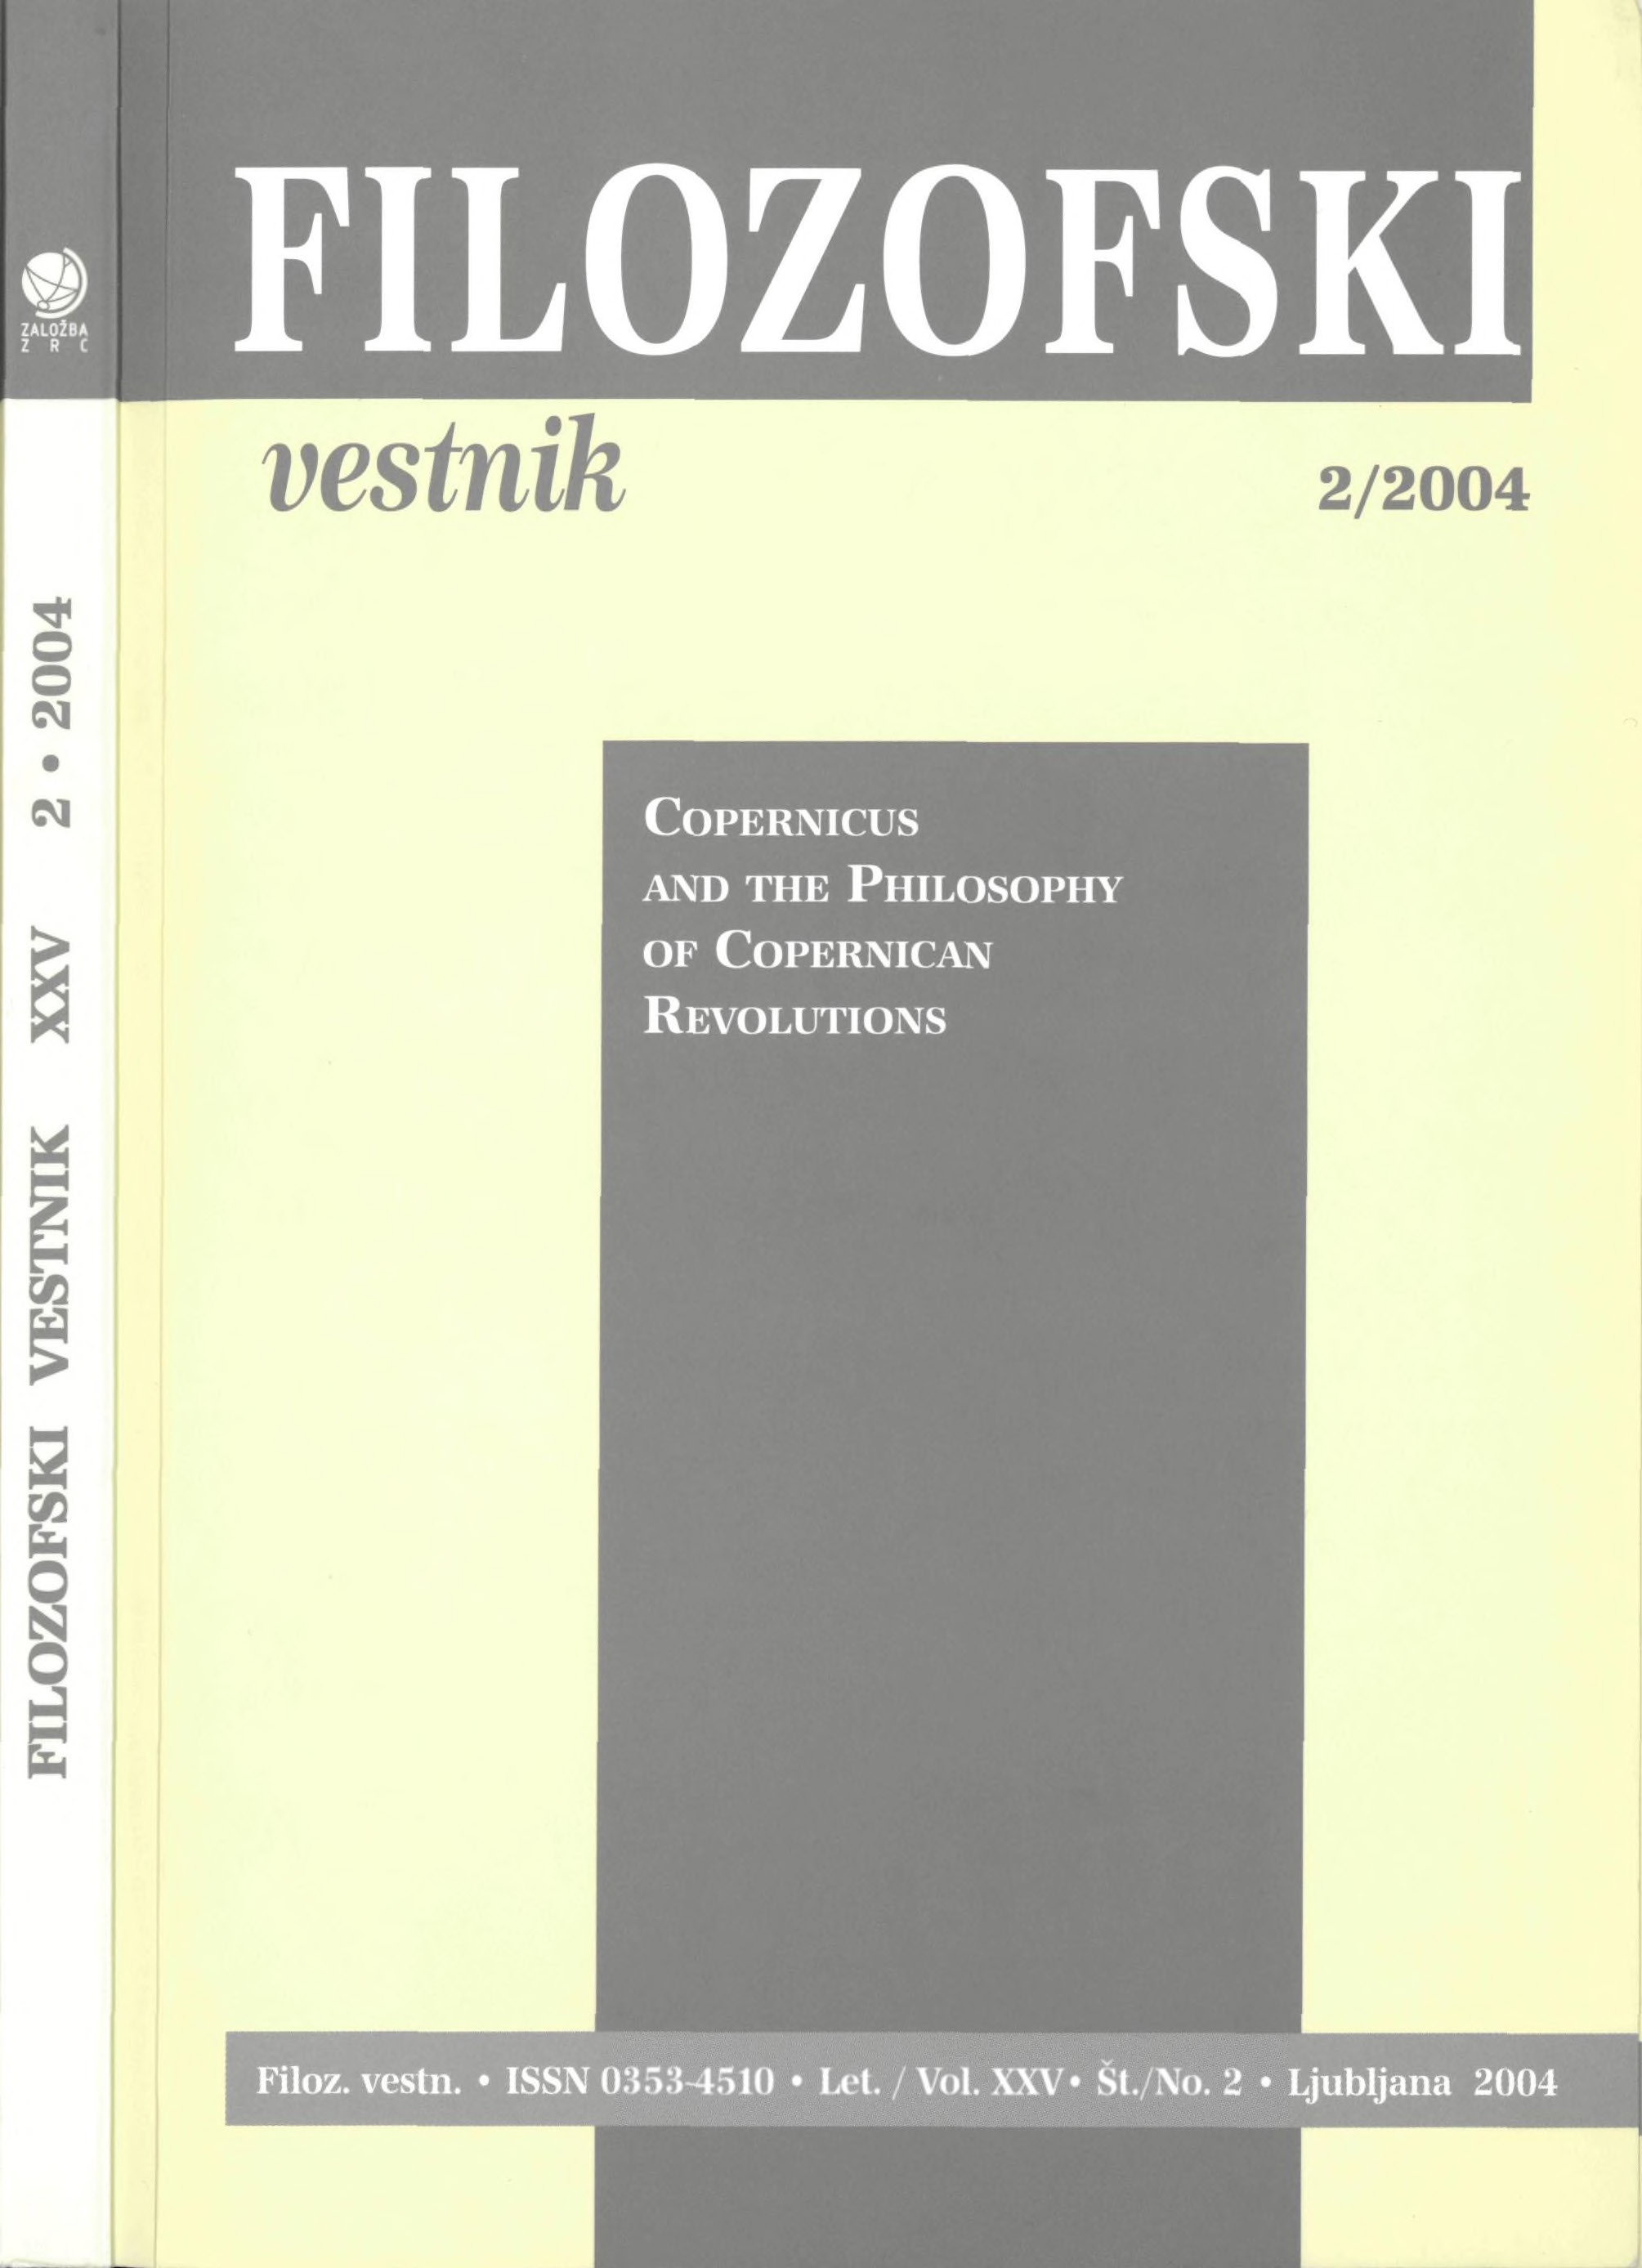 					Poglej Letn. 25 Št. 2 (2004): Copernicus and the Philosophy of Copernican Revolutions
				